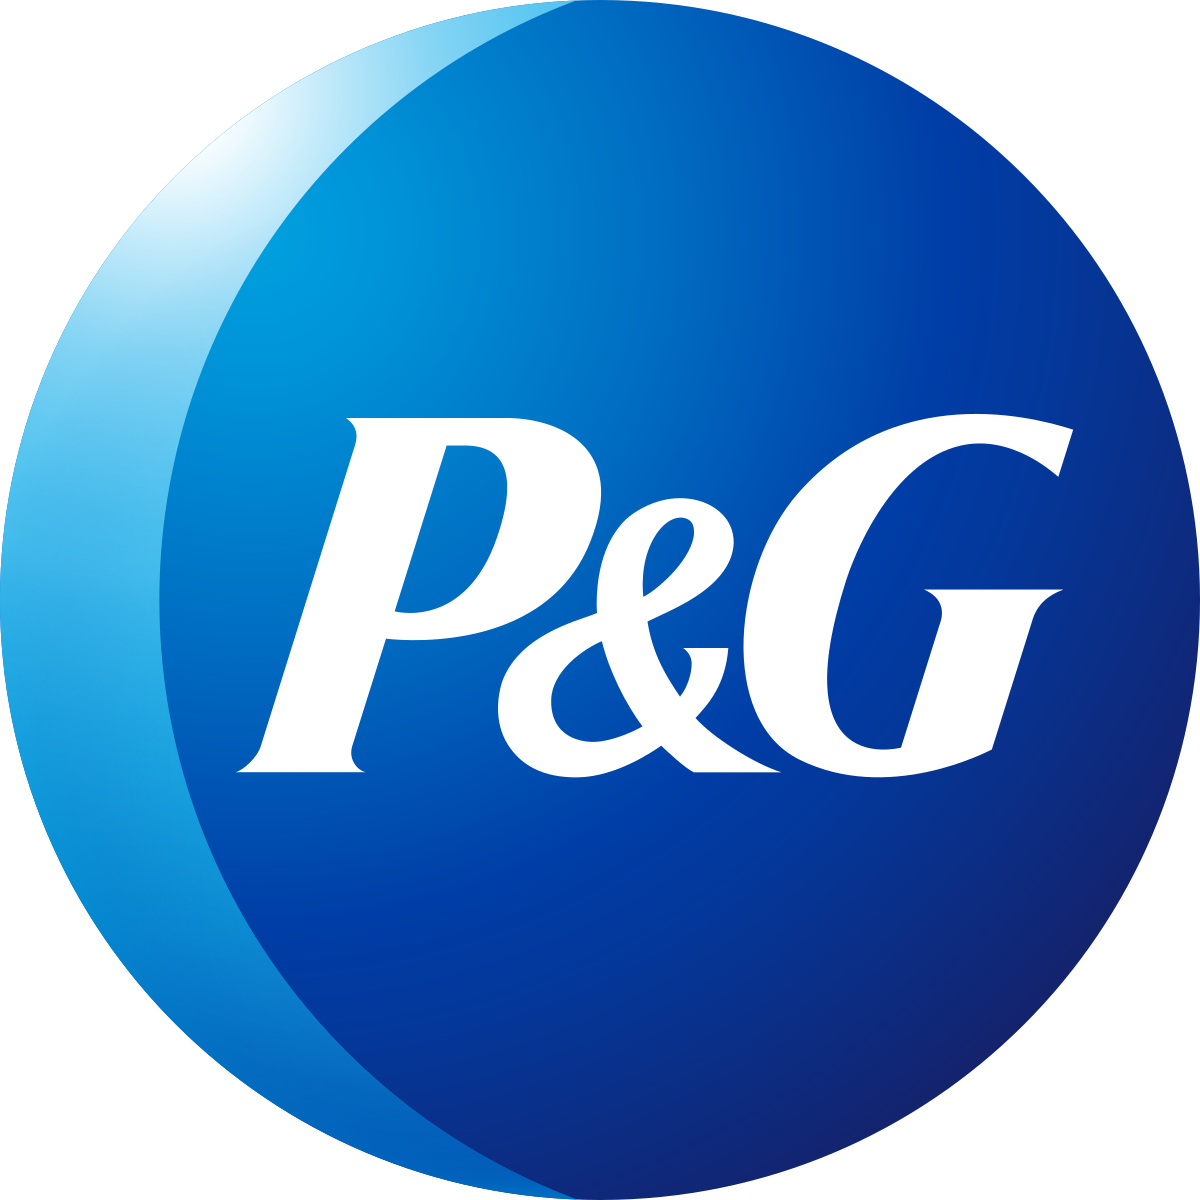 Event Sponsor - Proctor & Gamble (logo)